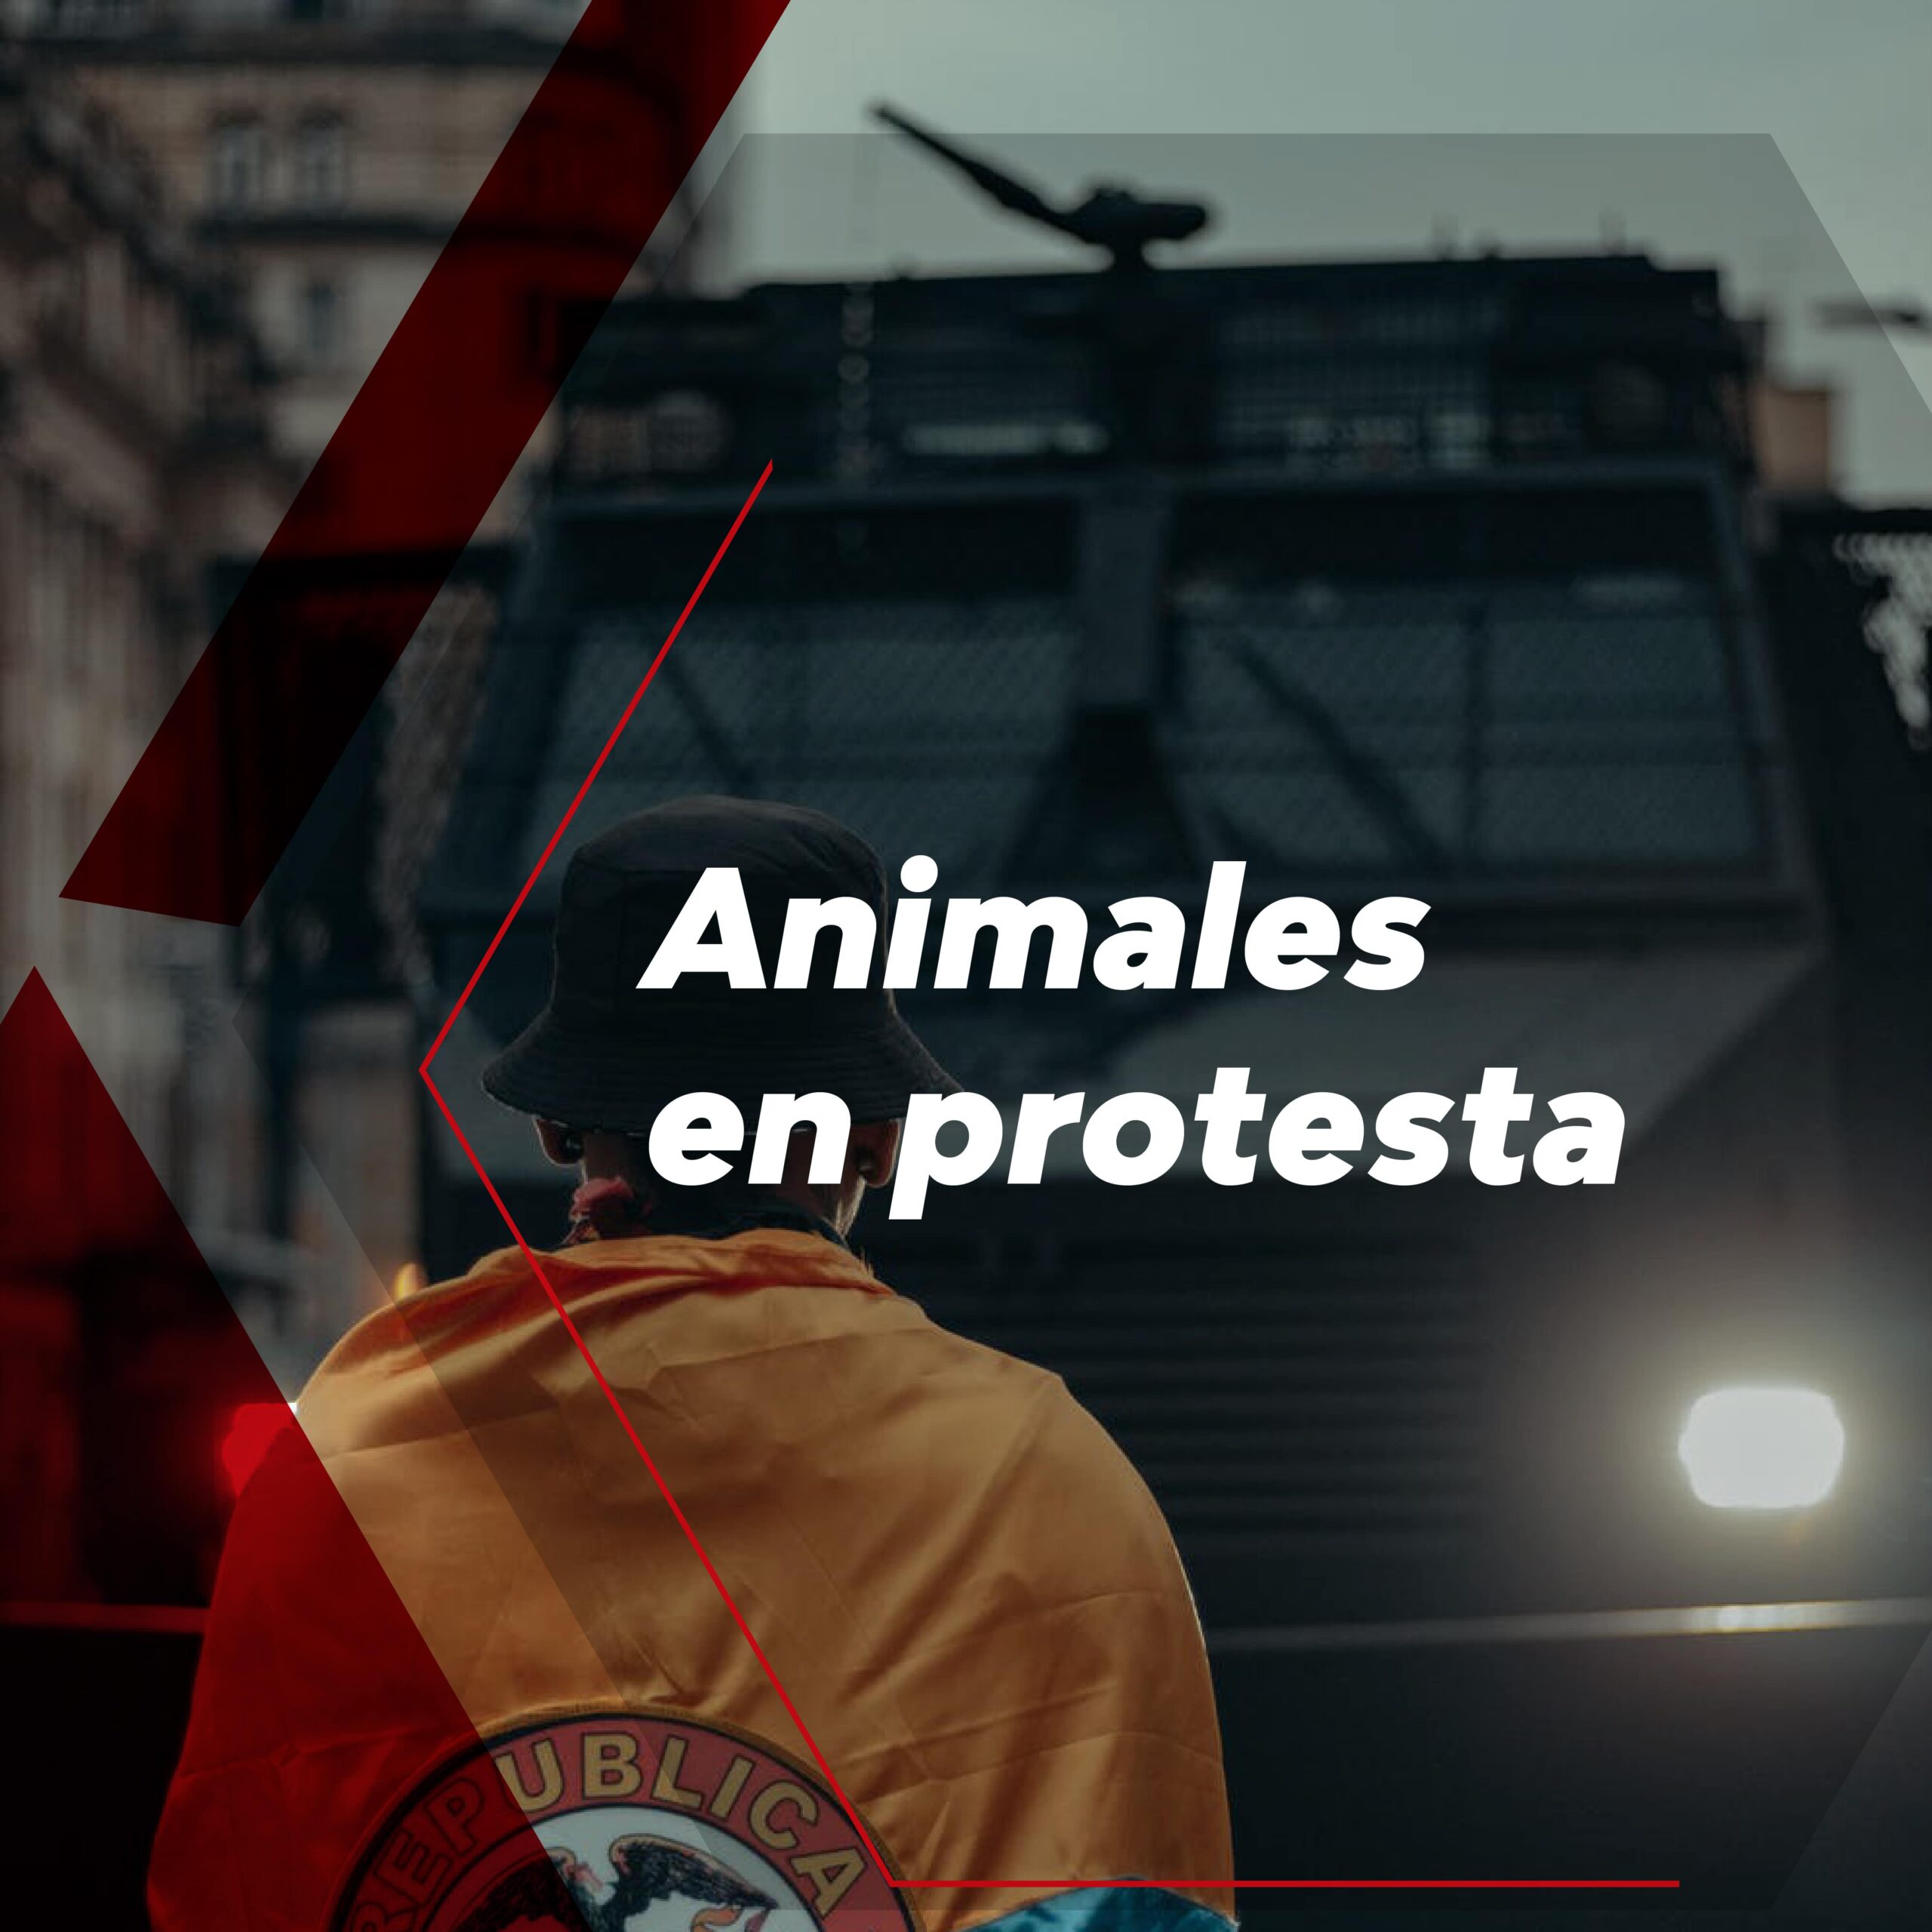 Animales protesta policia